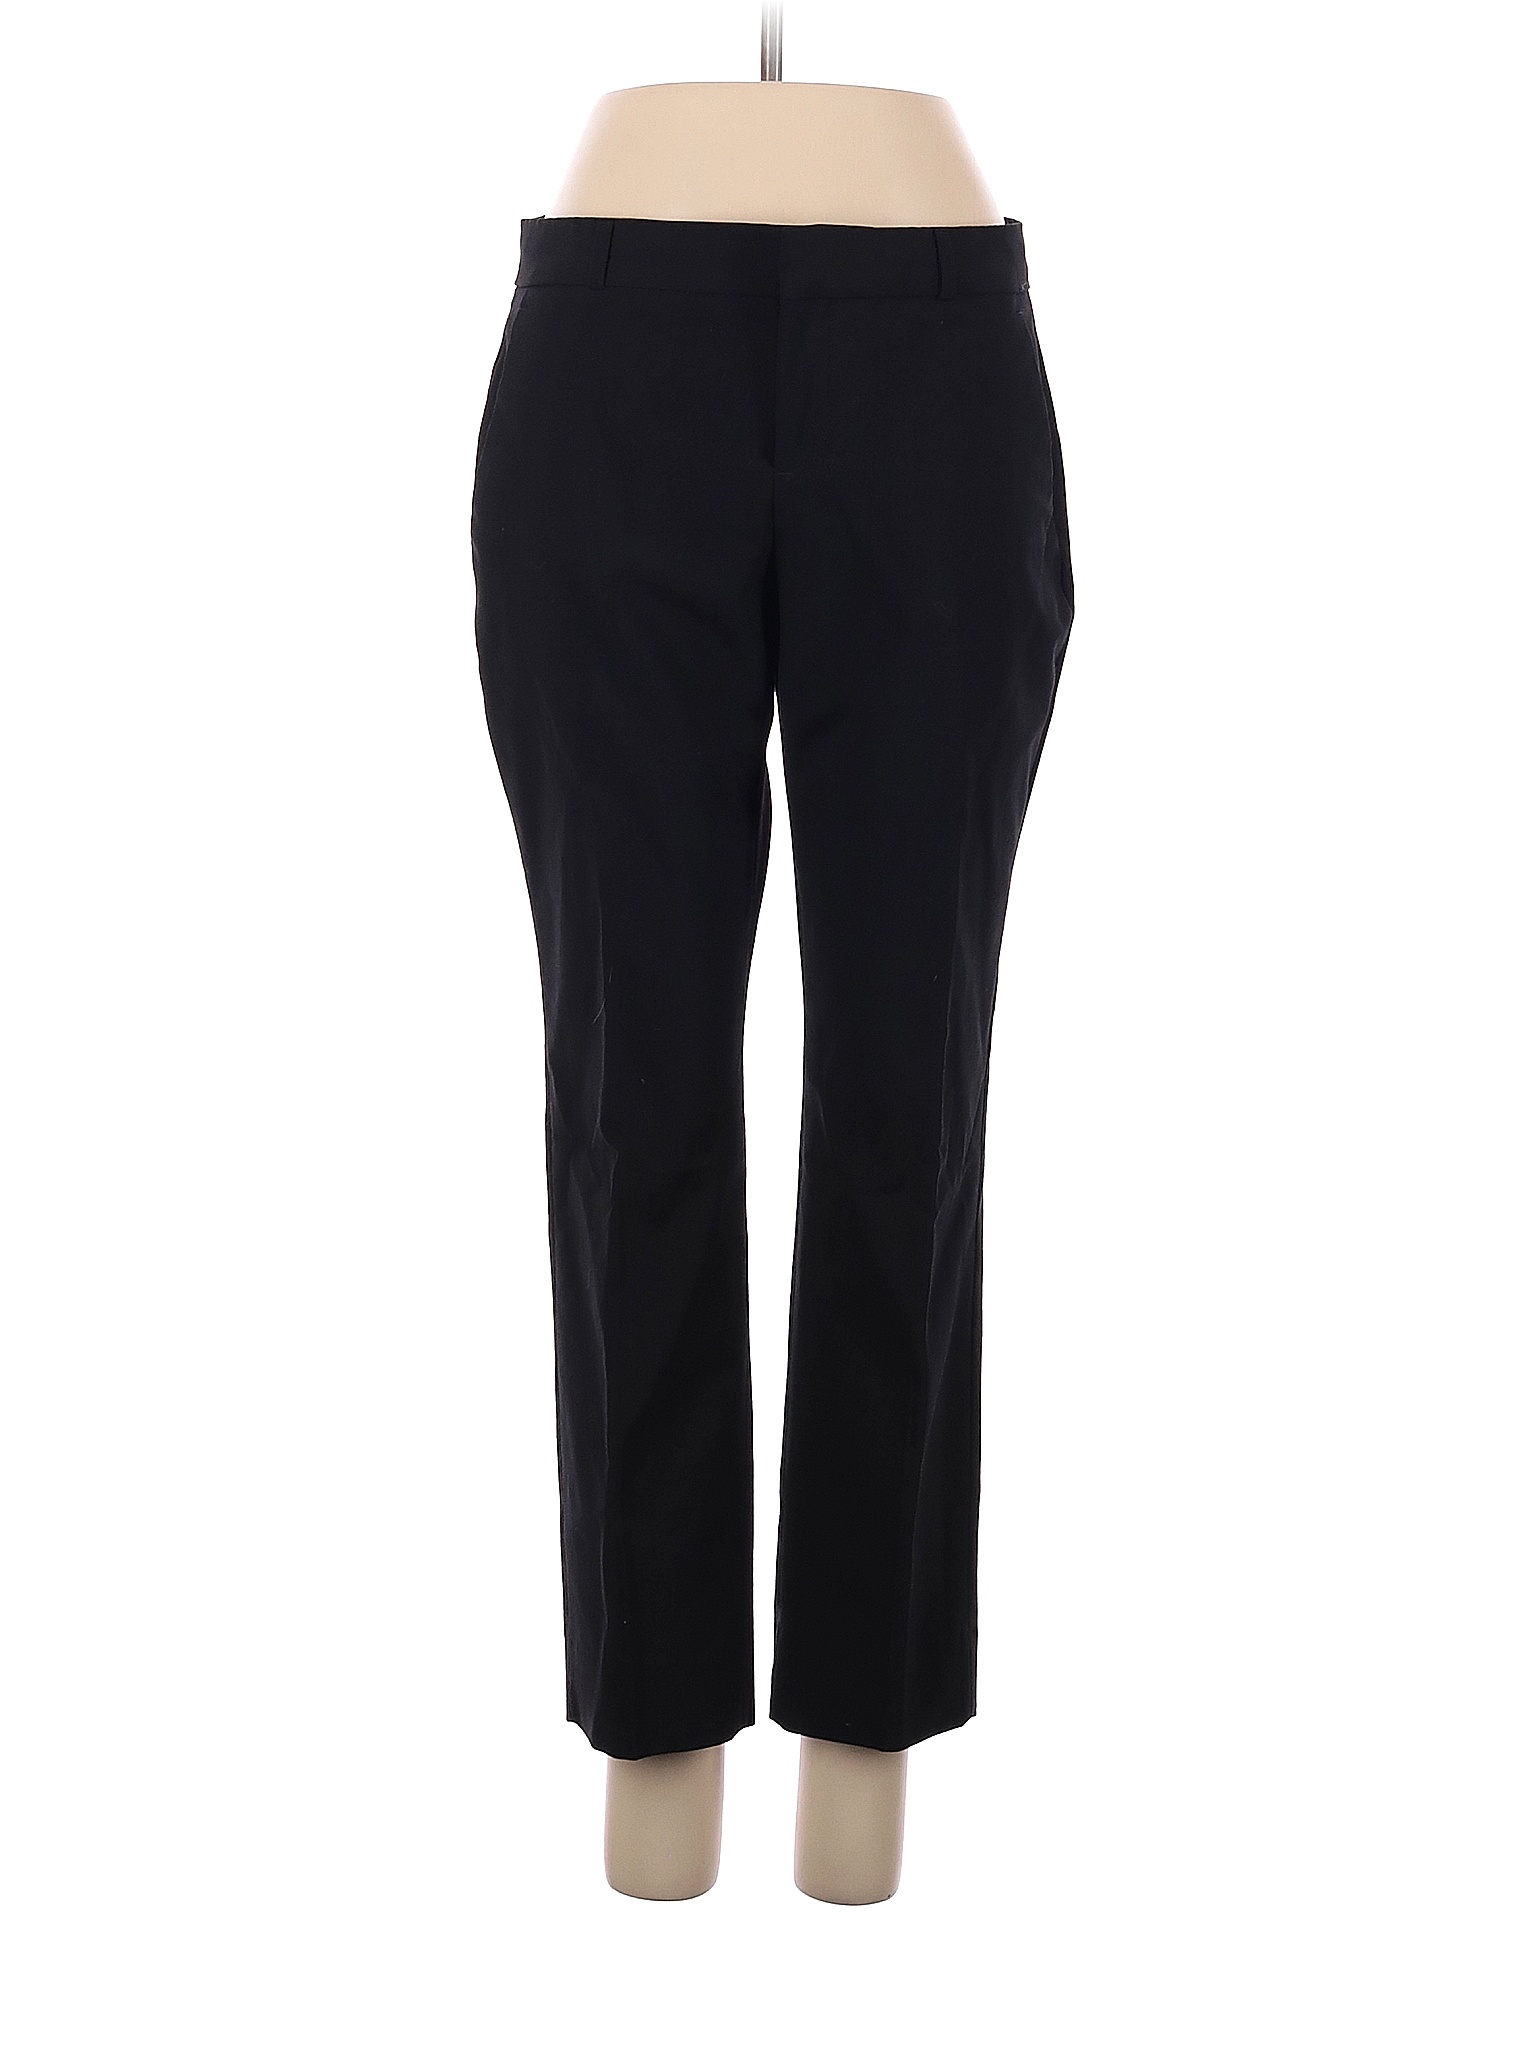 Banana Republic Polka Dots Black Dress Pants Size 2 (Petite) - 89% off ...